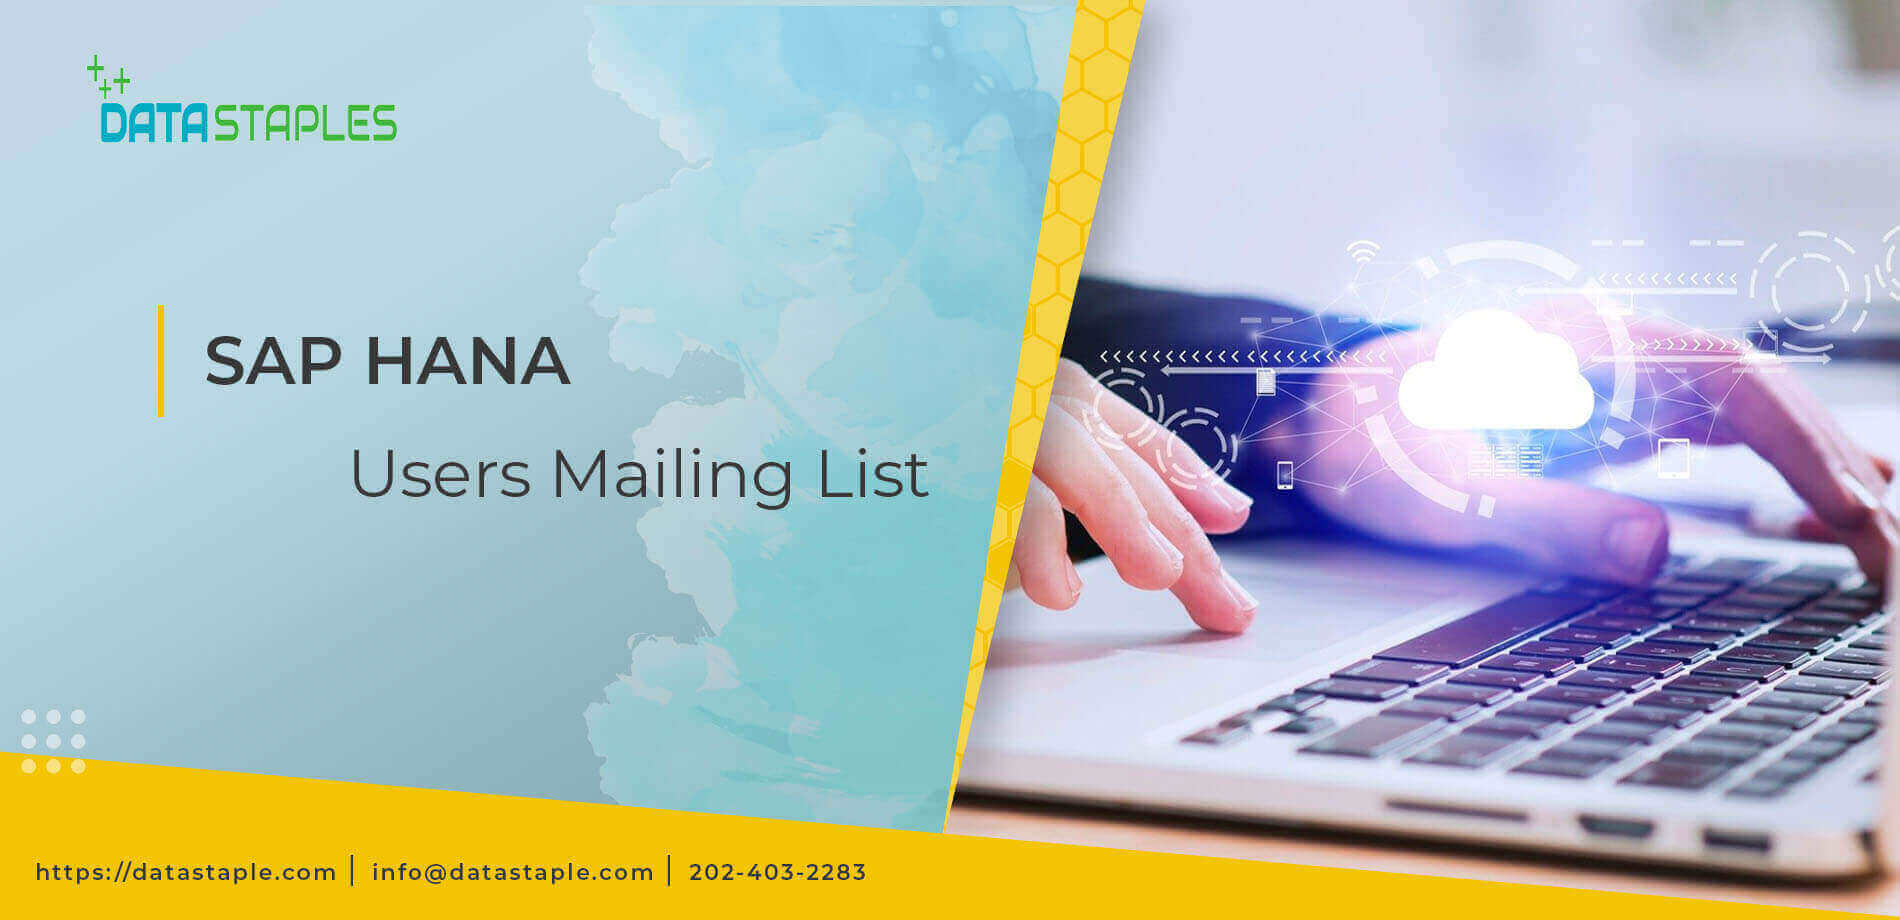 SAP HANA Users Mailing List | DataStaples